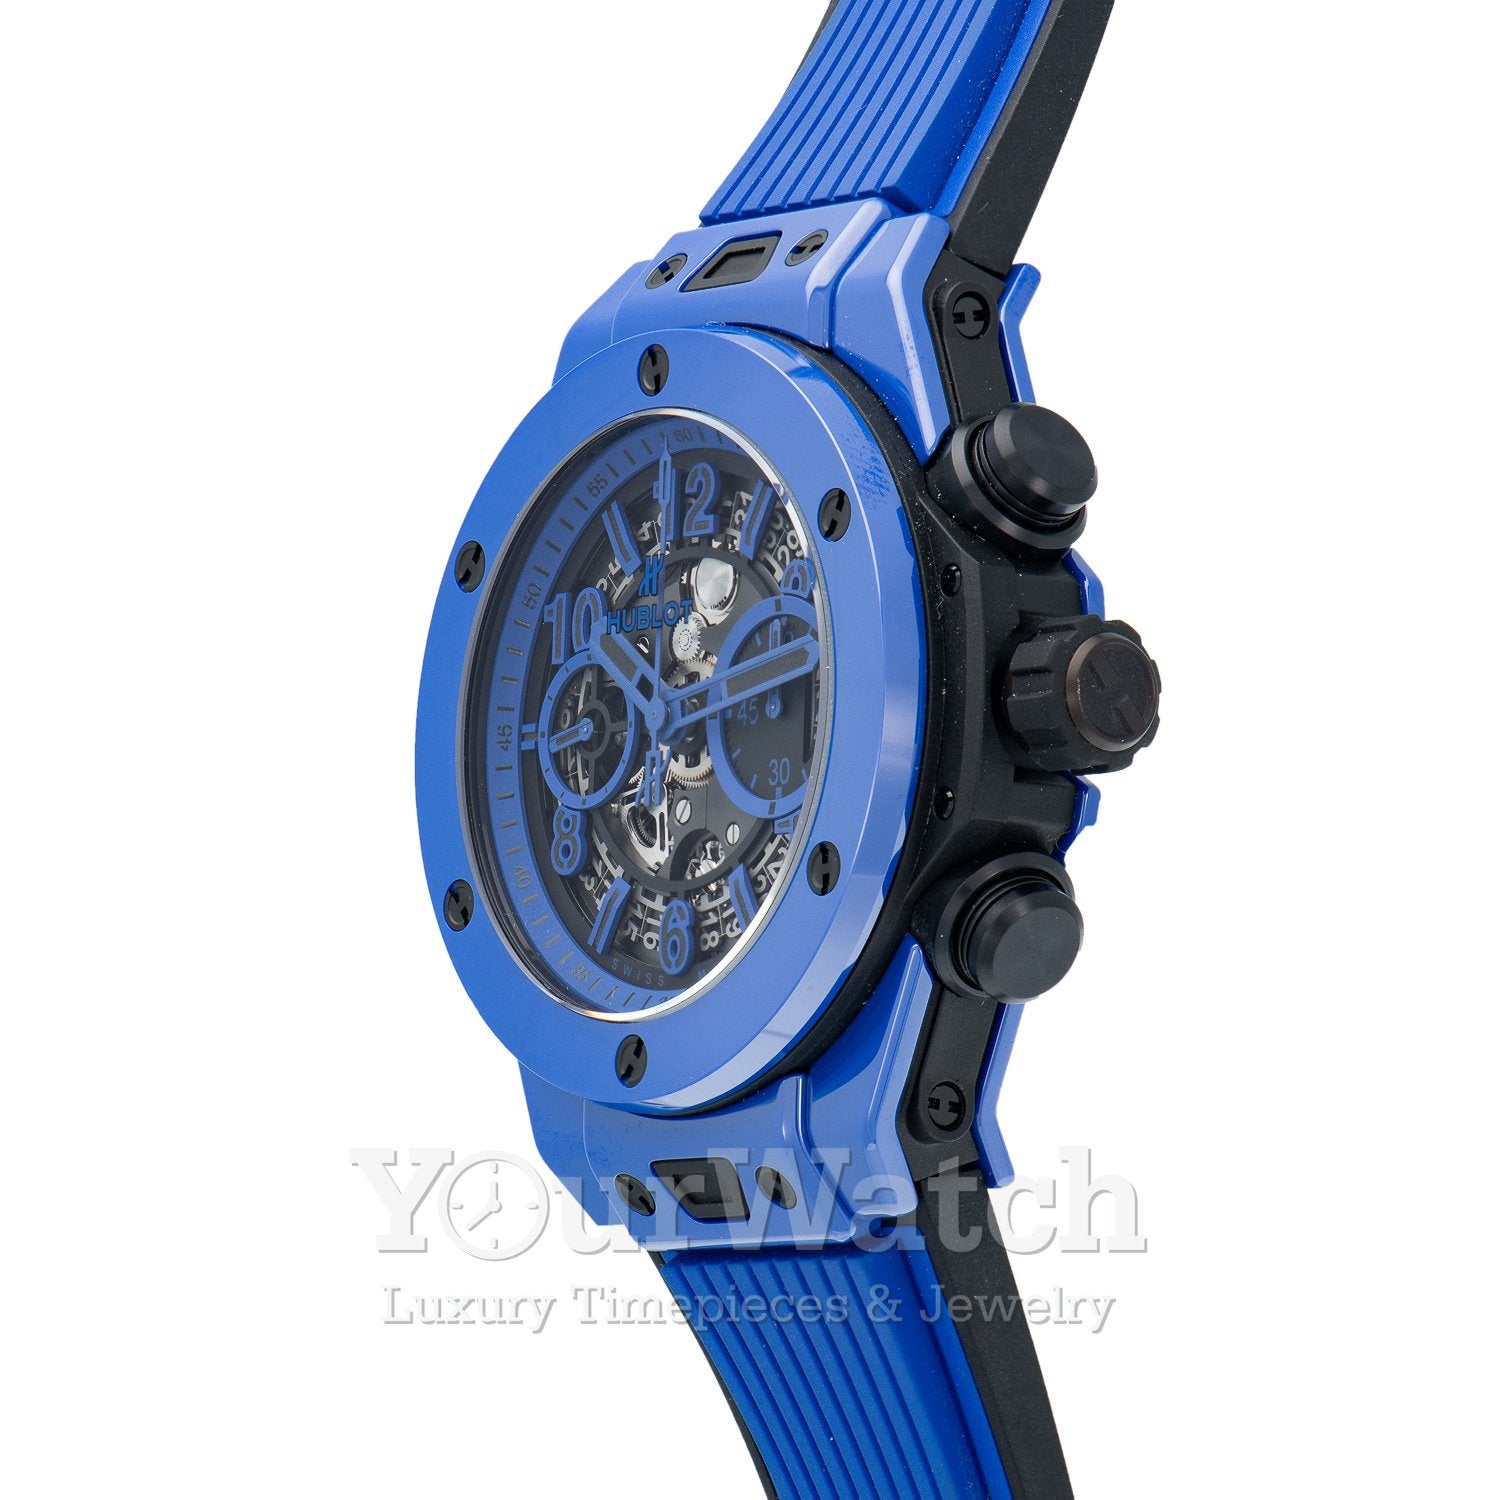 Hublot Big Bang Unico Blue Magic Limited Edition Chronograph Automatic Matte Black Men's Watch 411.ES.5119.RX